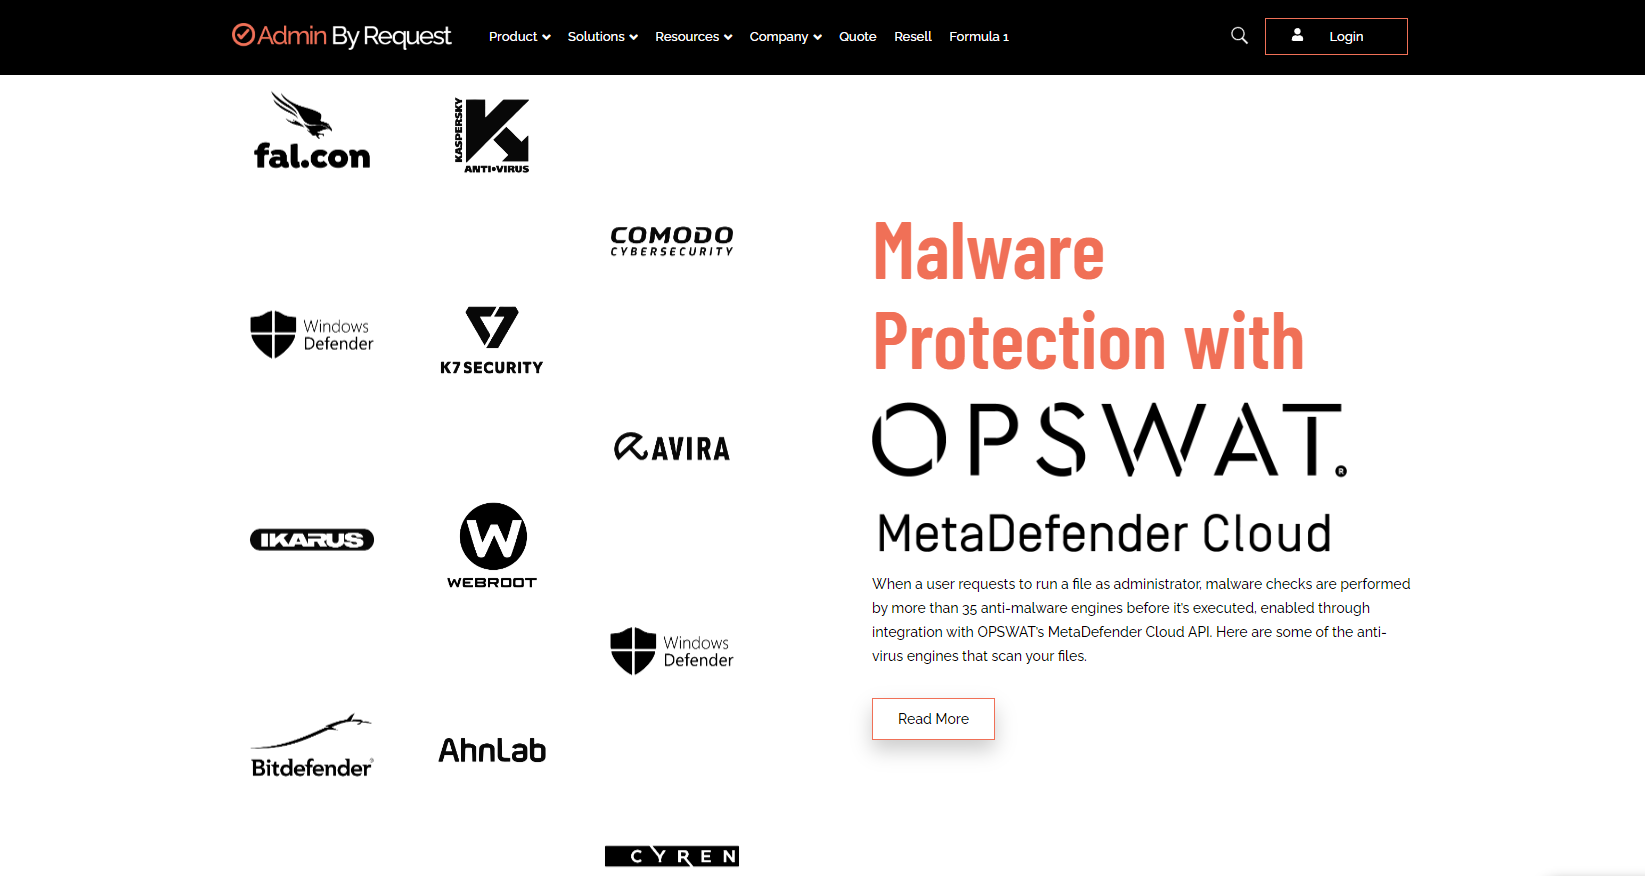 OPSWAT MetaDefender Anti-Malware Engines